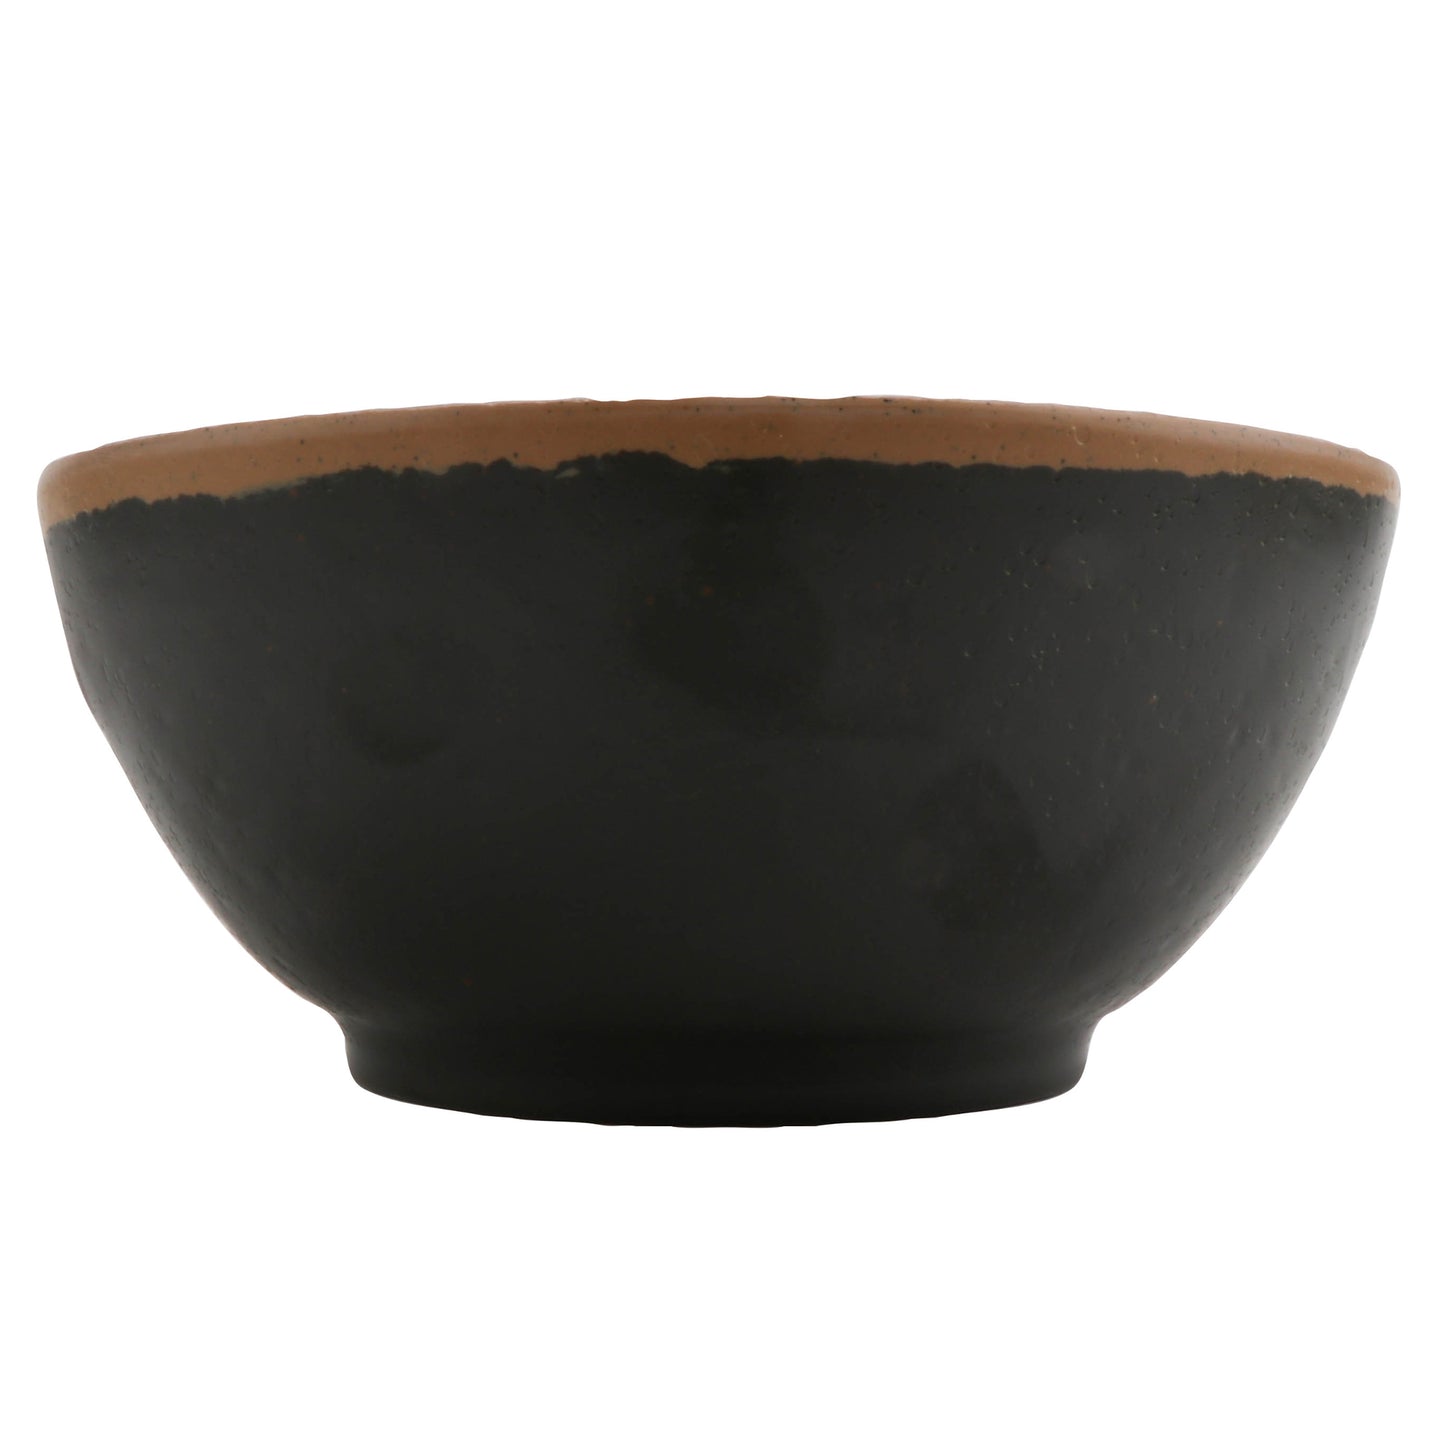 20 oz. Brown, Melamine, Round Entree Bowl, (28 oz. rim-full), 6.25" Top Dia., 2.25" Deep, G.E.T. Pottery Market Glazed (12 Pack)